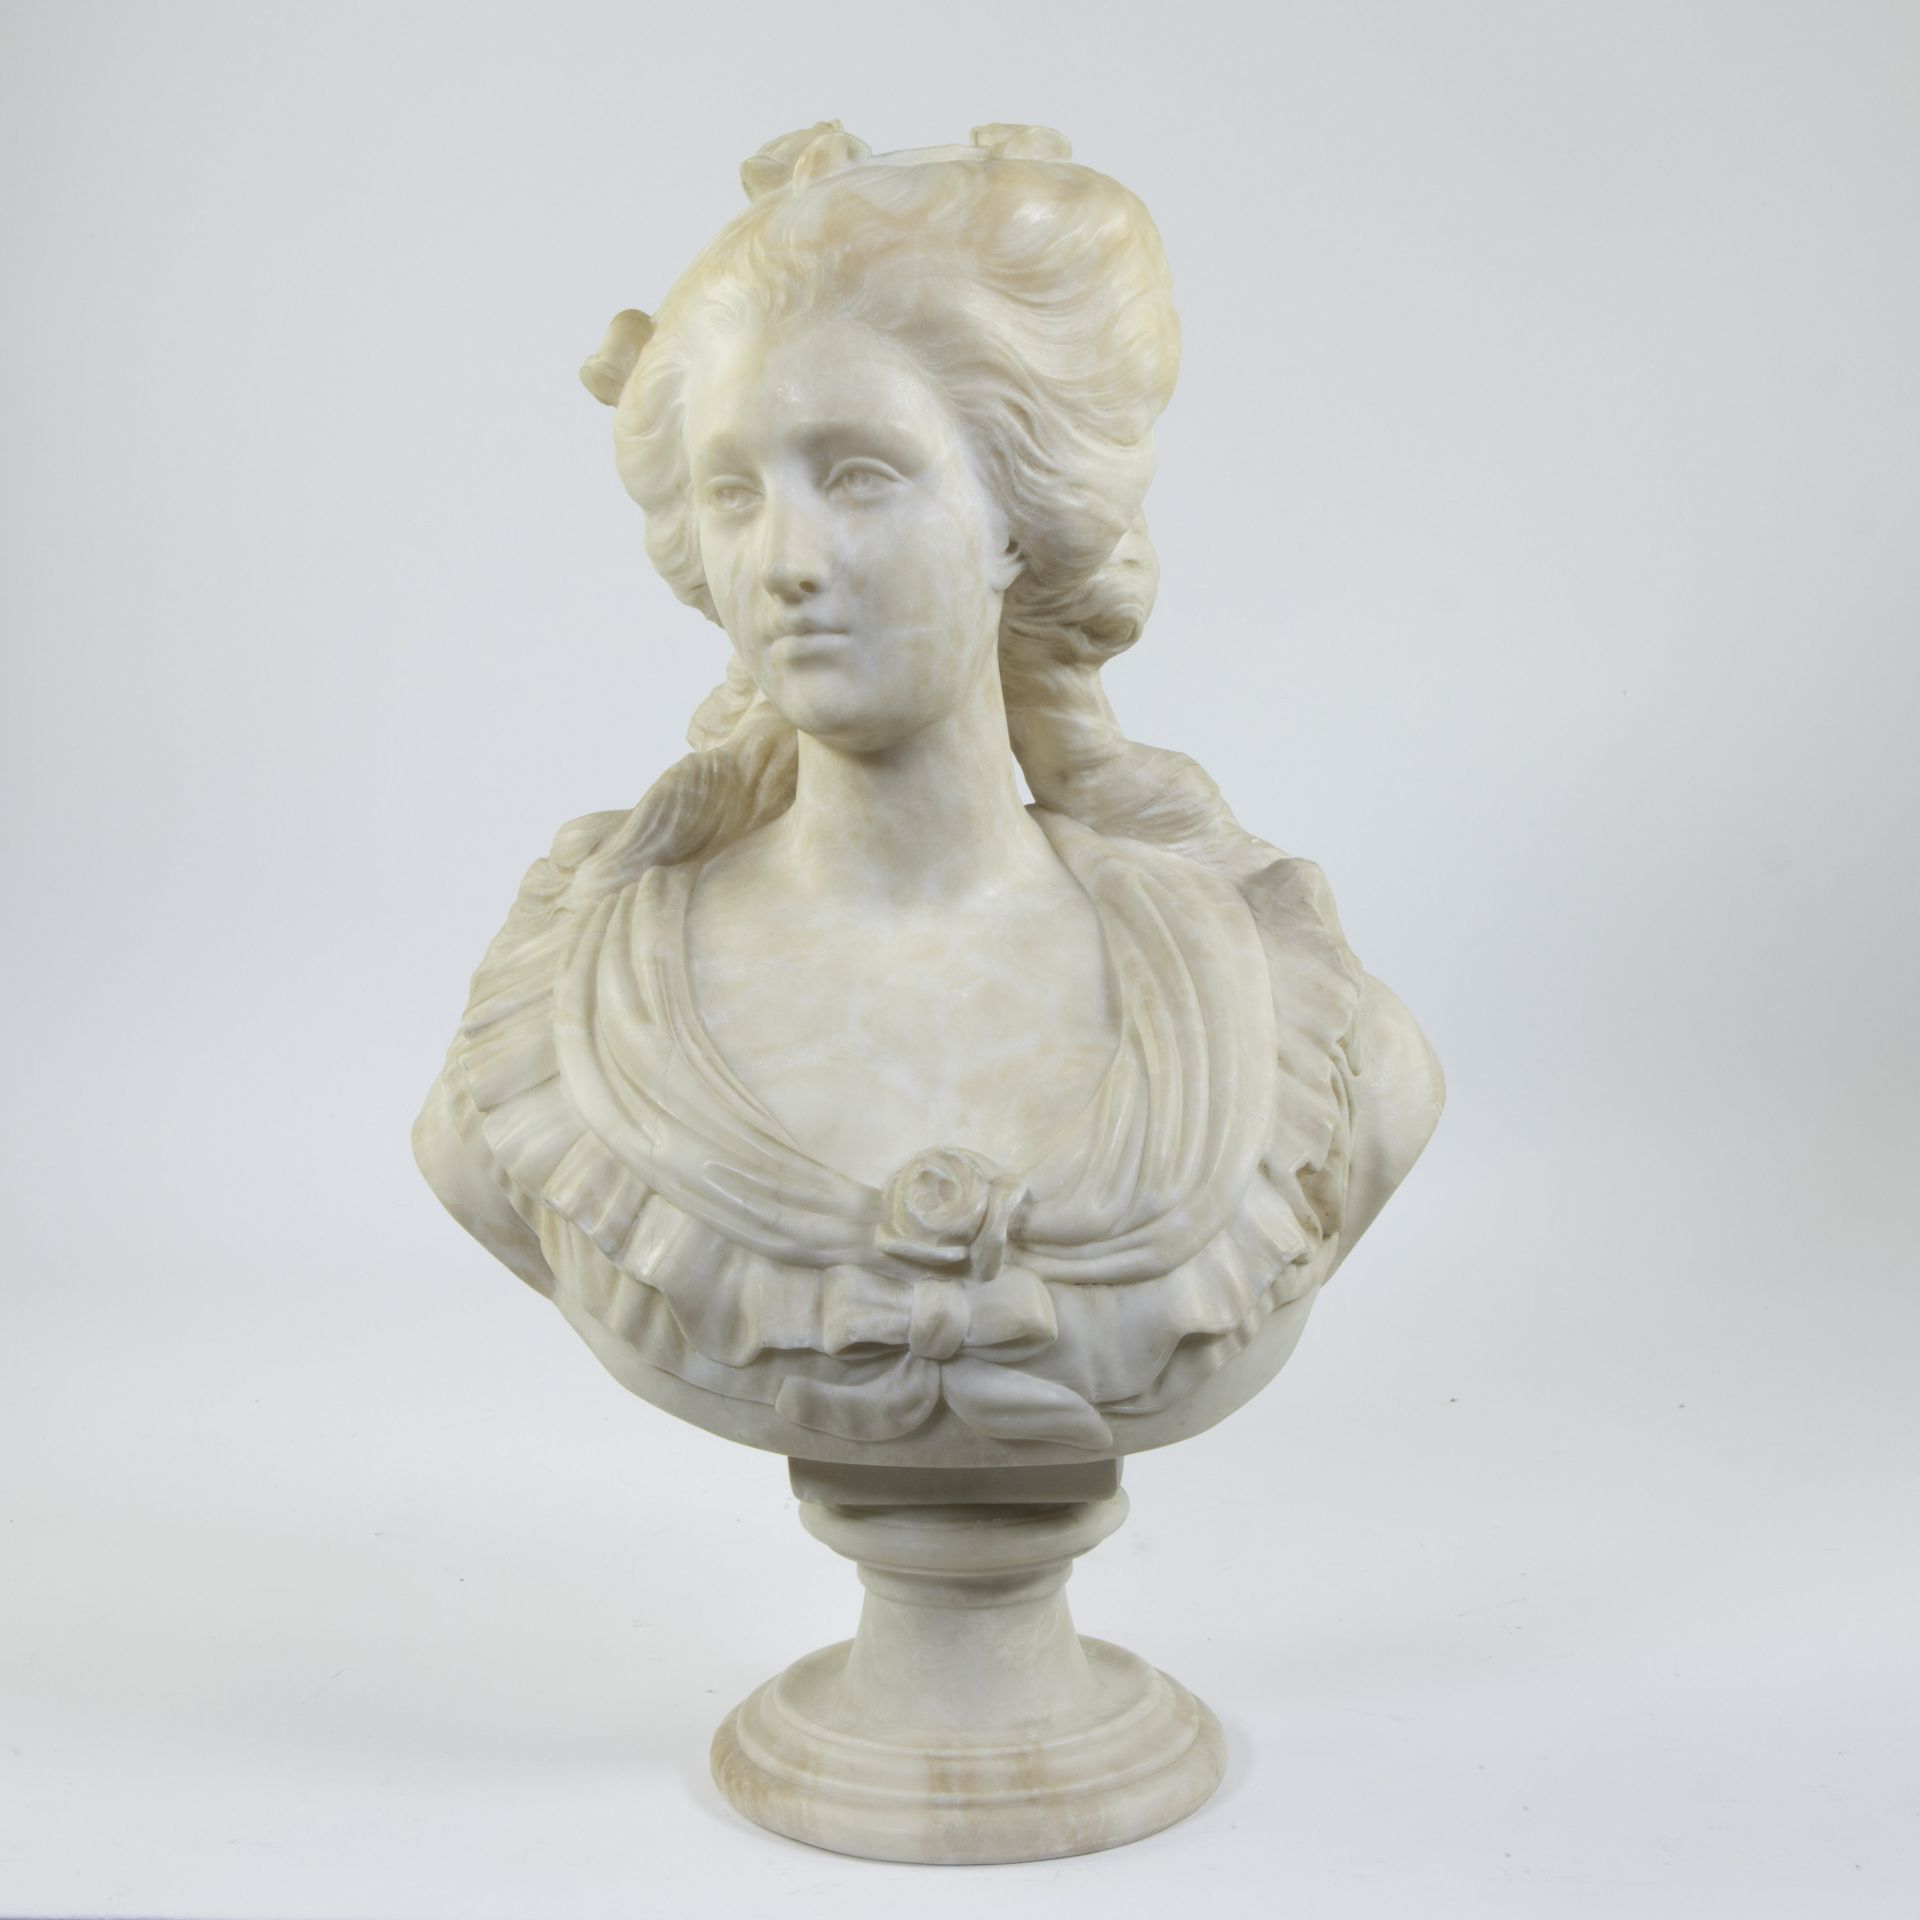 Augustin PAJOU (1730-1809), alabaster female bust, signed